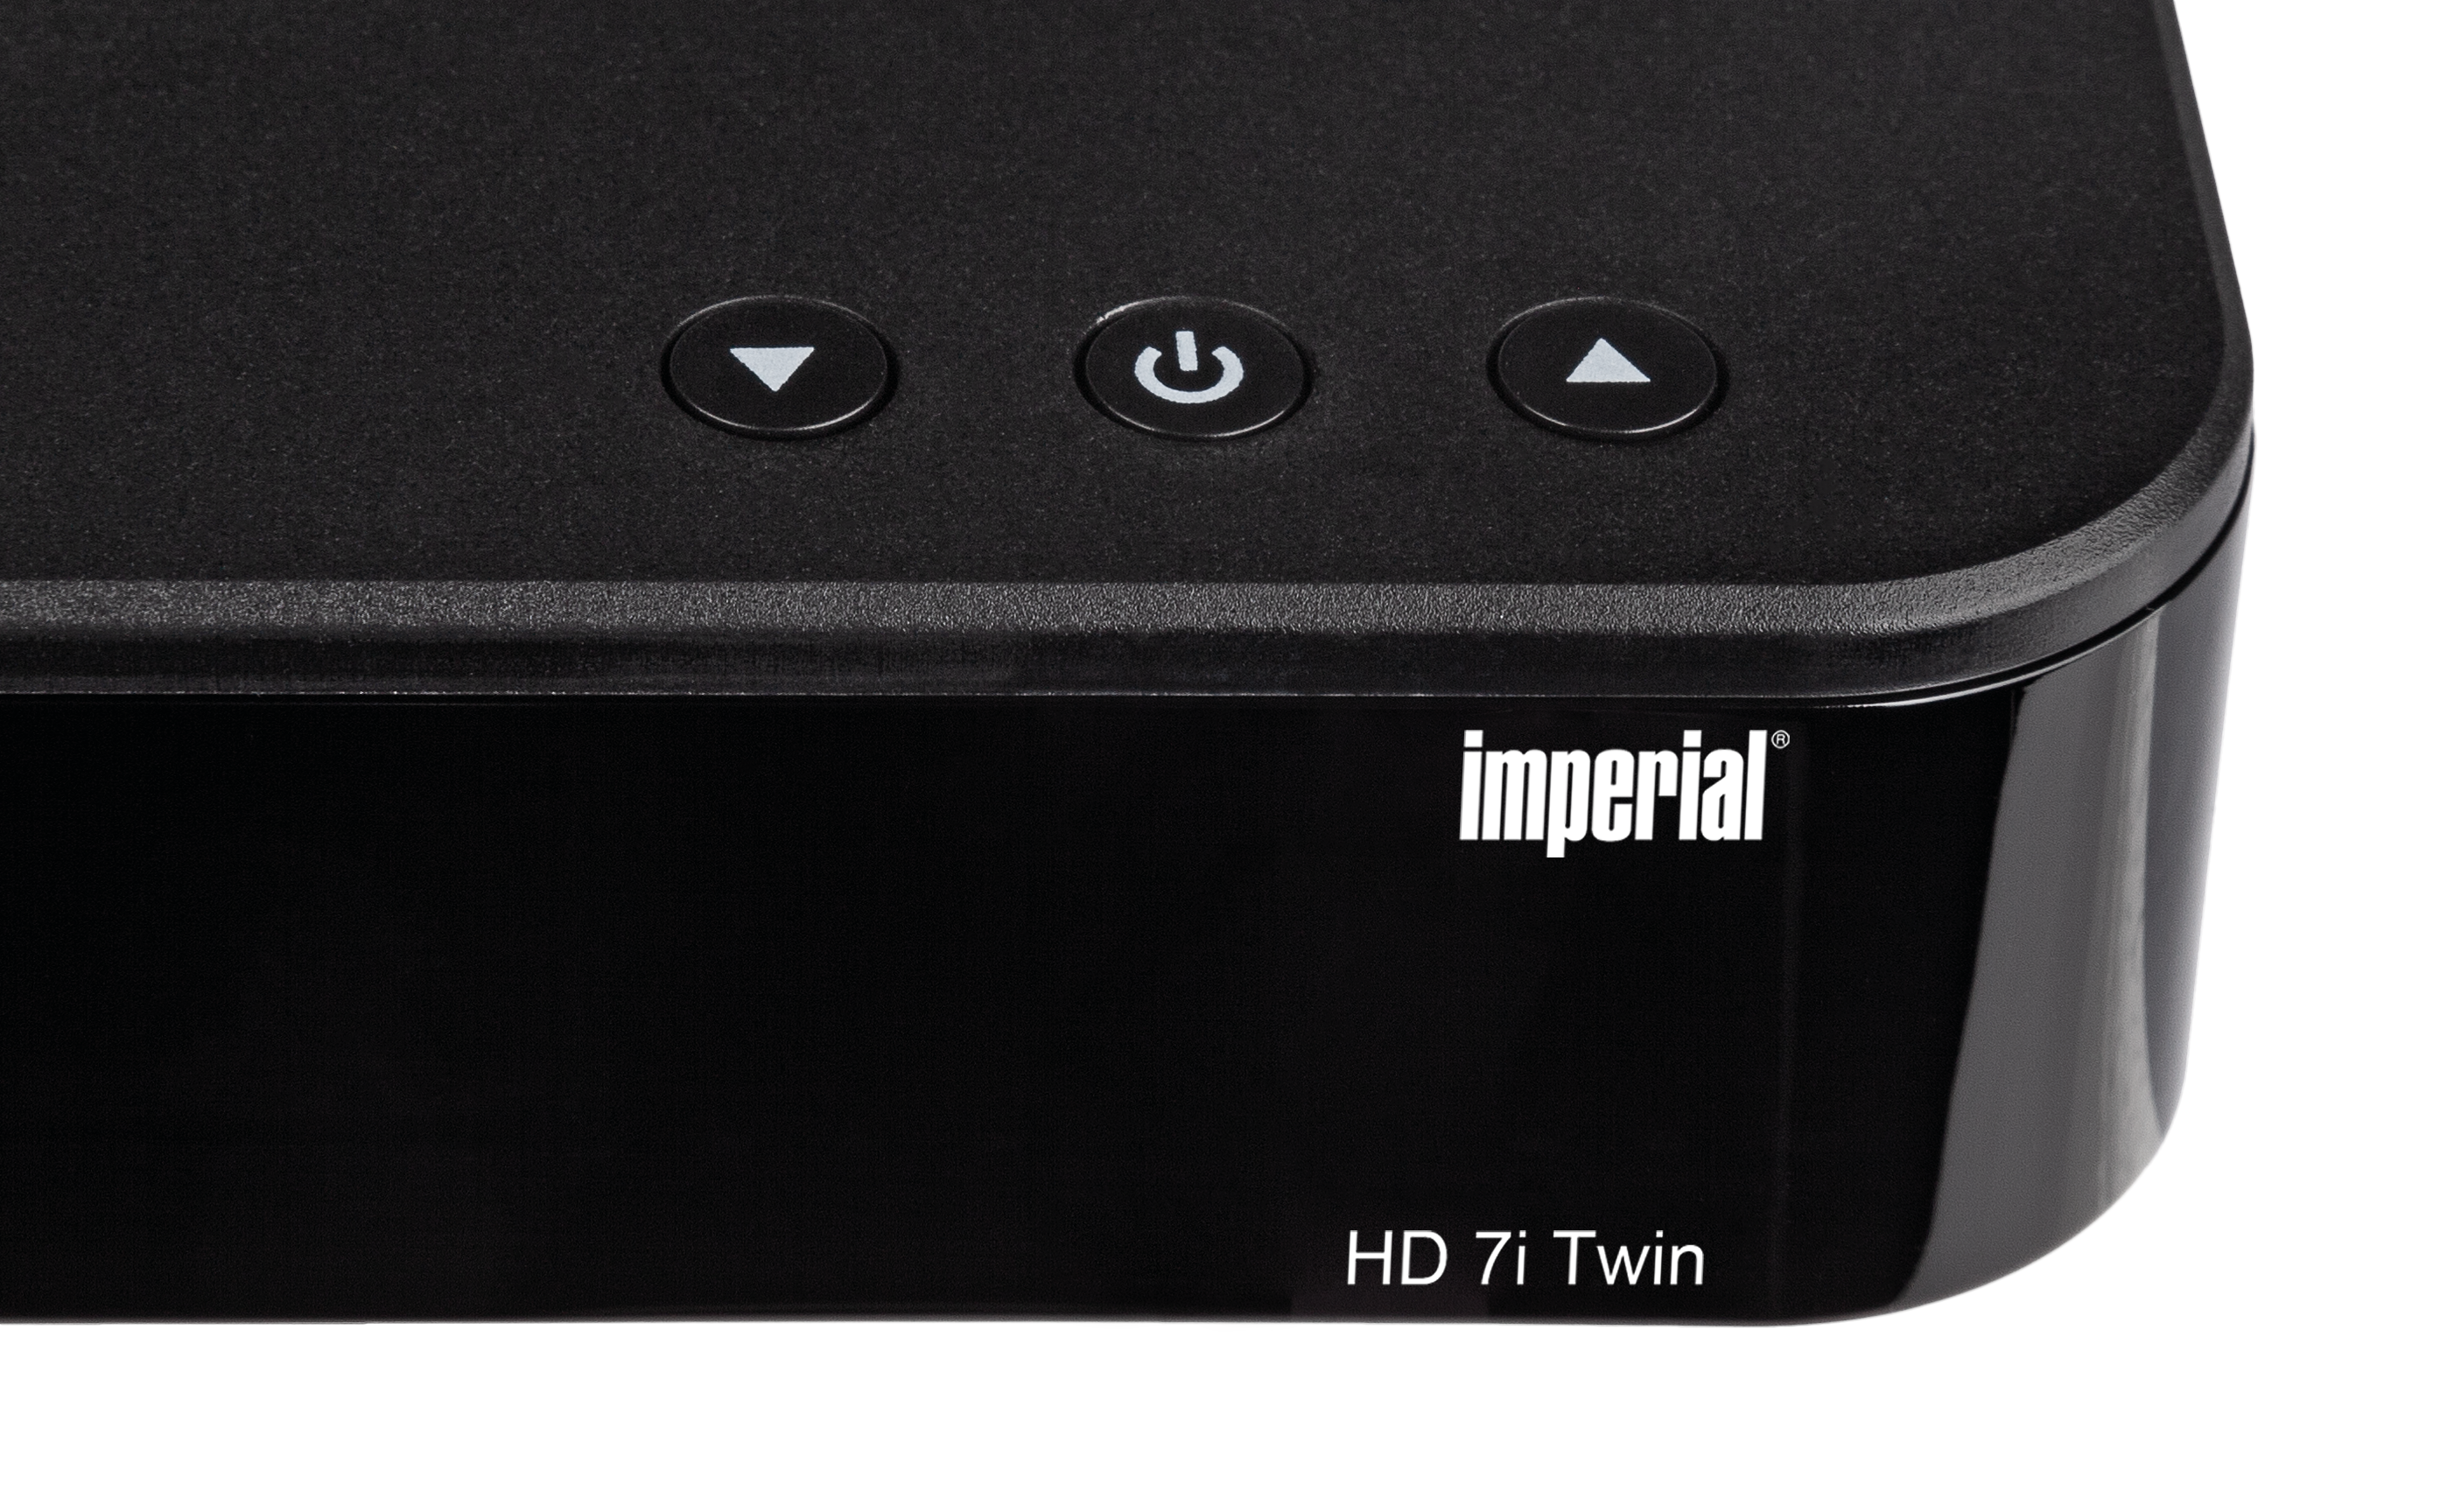 IMPERIAL 77-561-00 HD Twin Satreceiver Schwarz) (HDTV, Tuner, DVB-S2, DVB-S, Twin PVR-Funktion